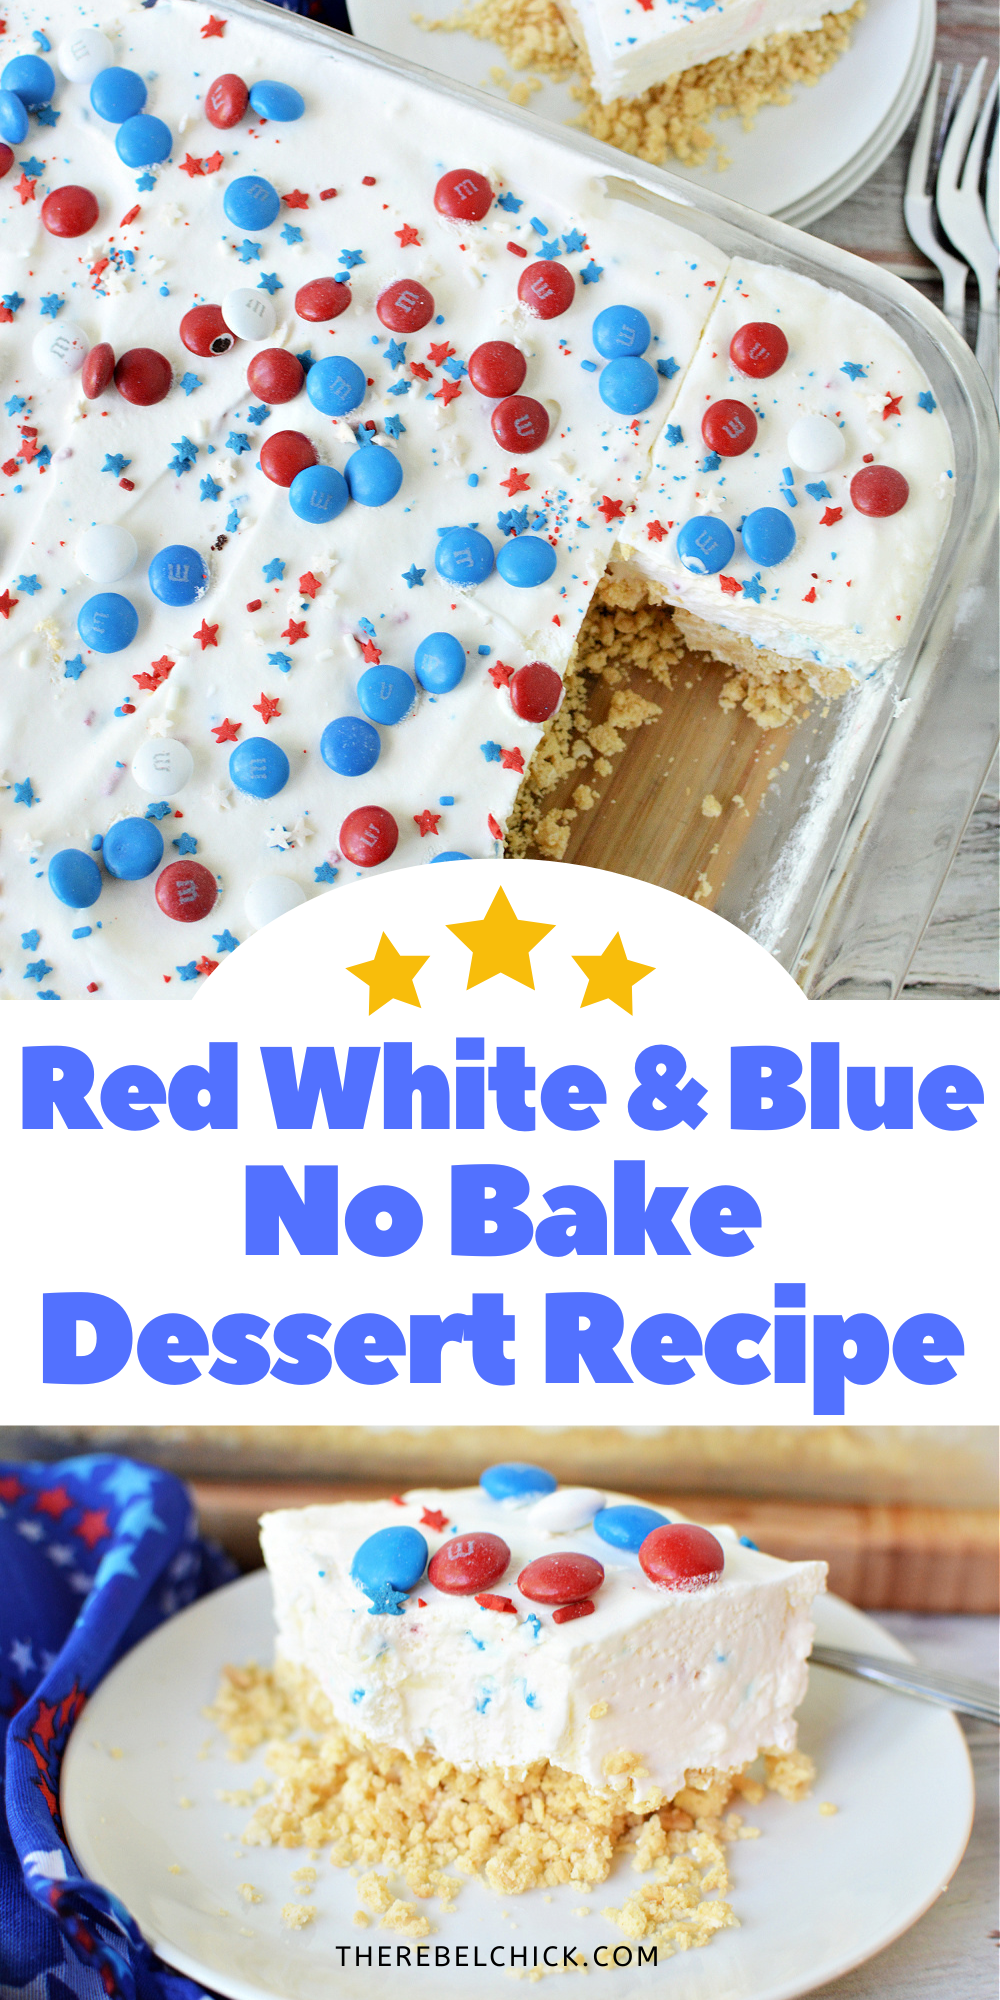 Red White & Blue No Bake Dessert Recipe